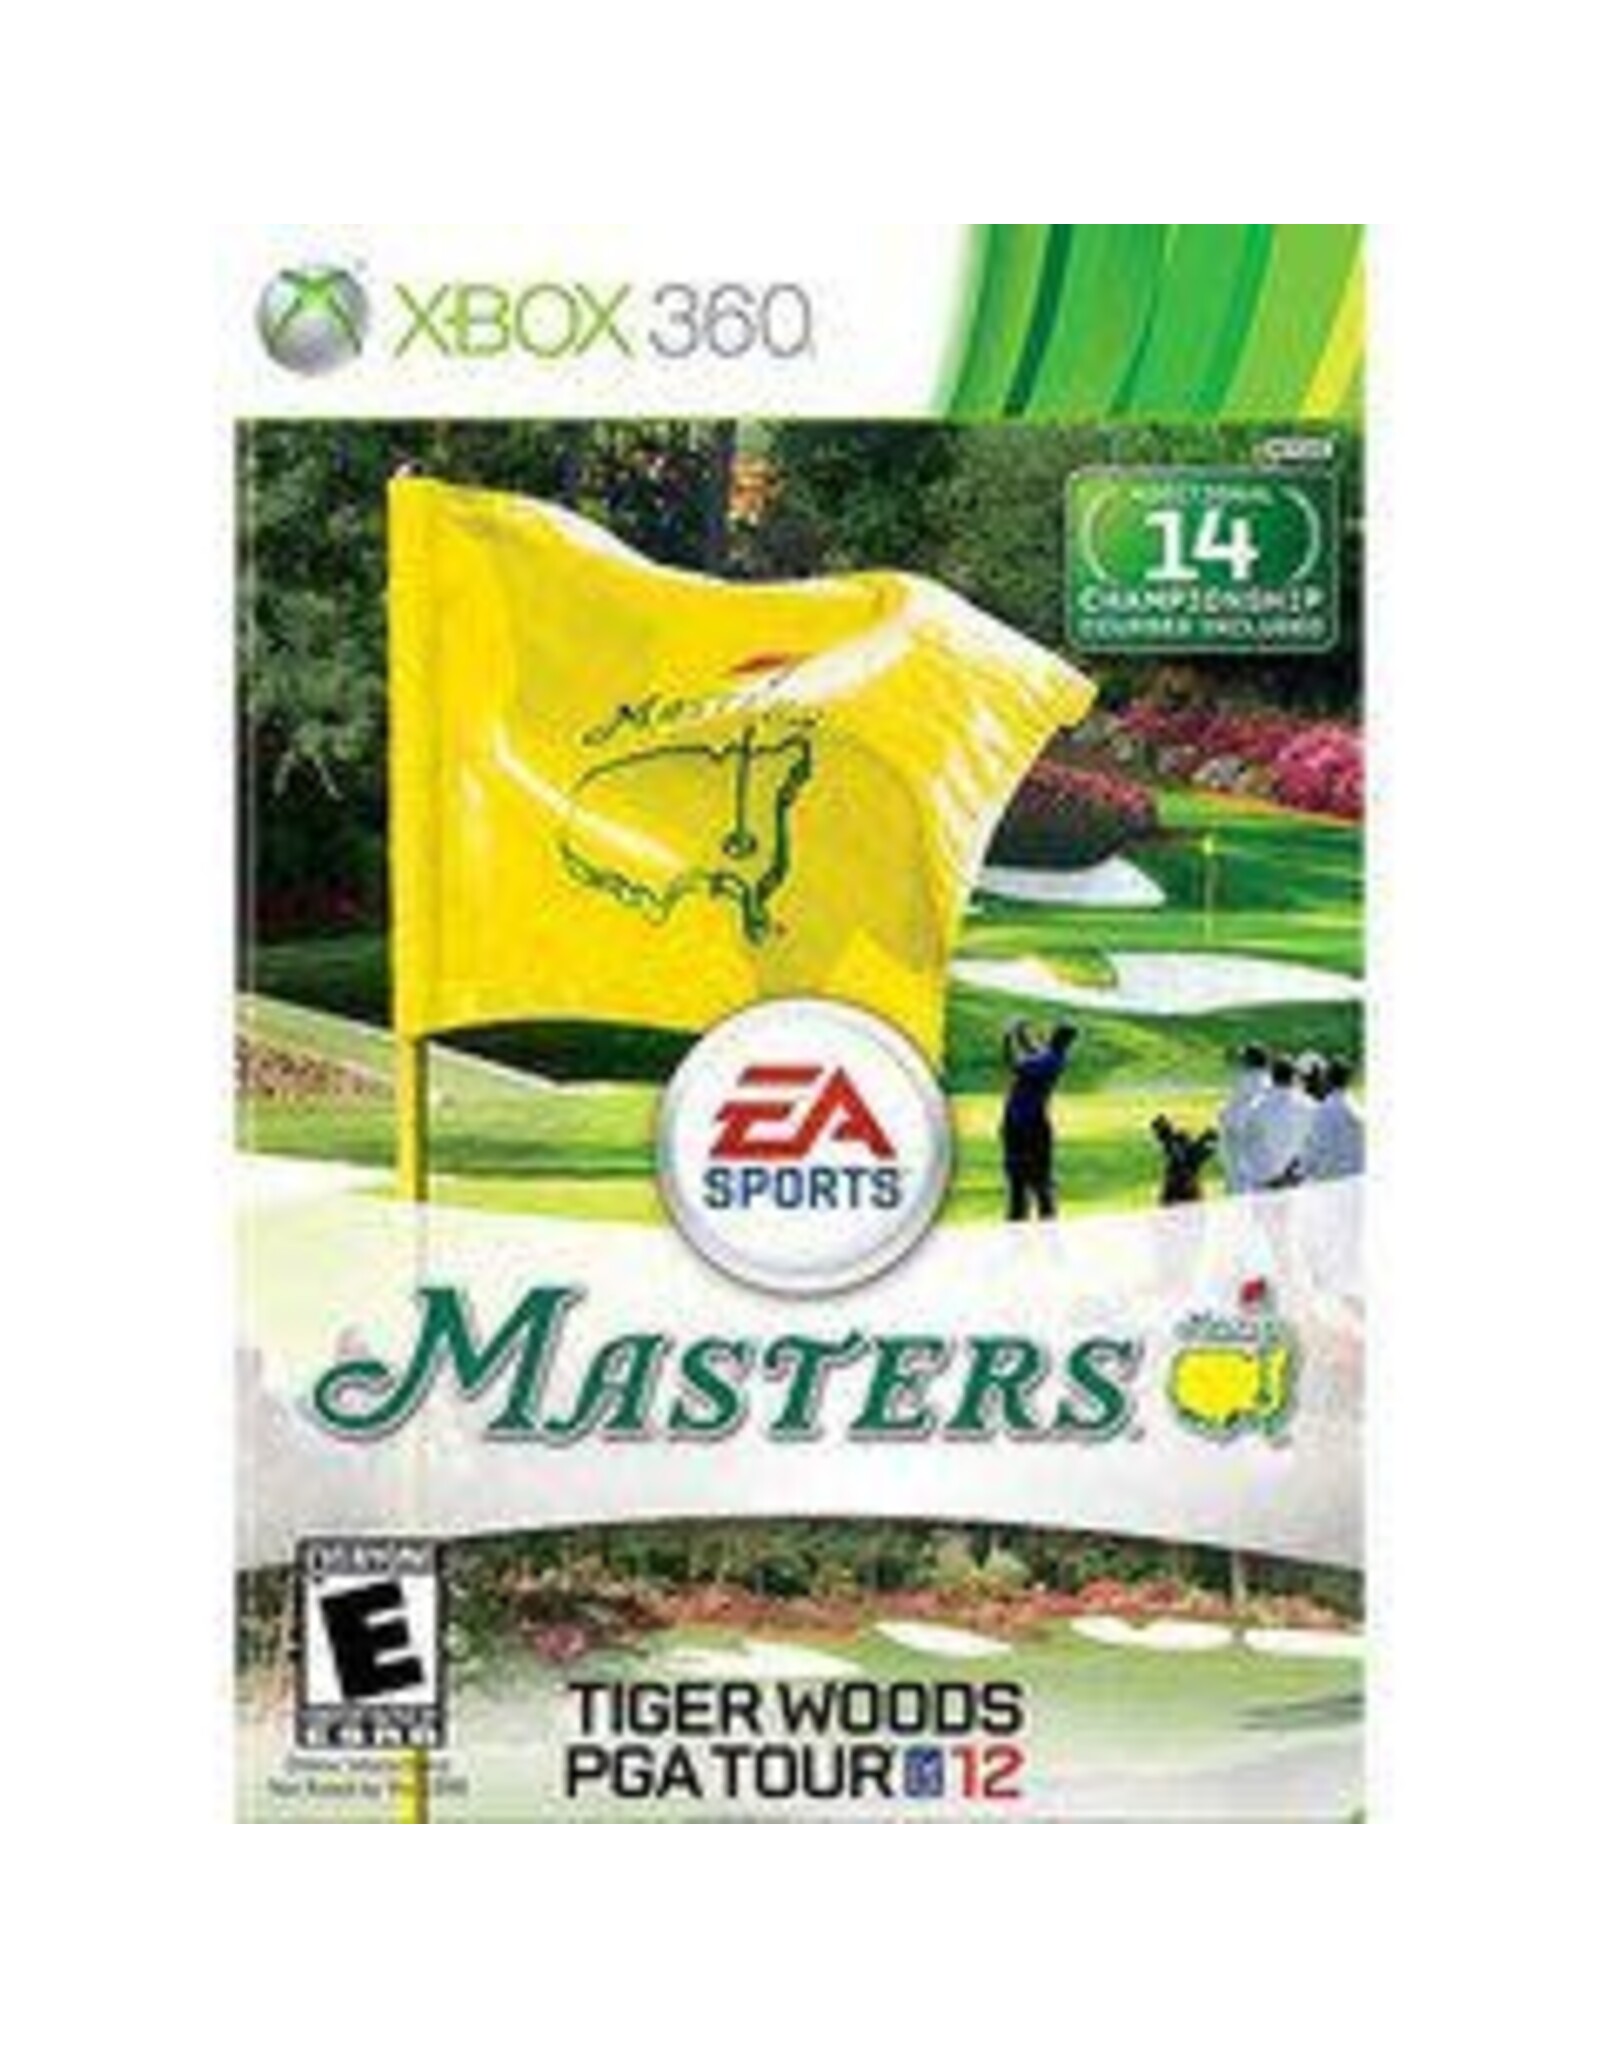 Xbox 360 Tiger Woods PGA Tour 12: The Masters (CiB)